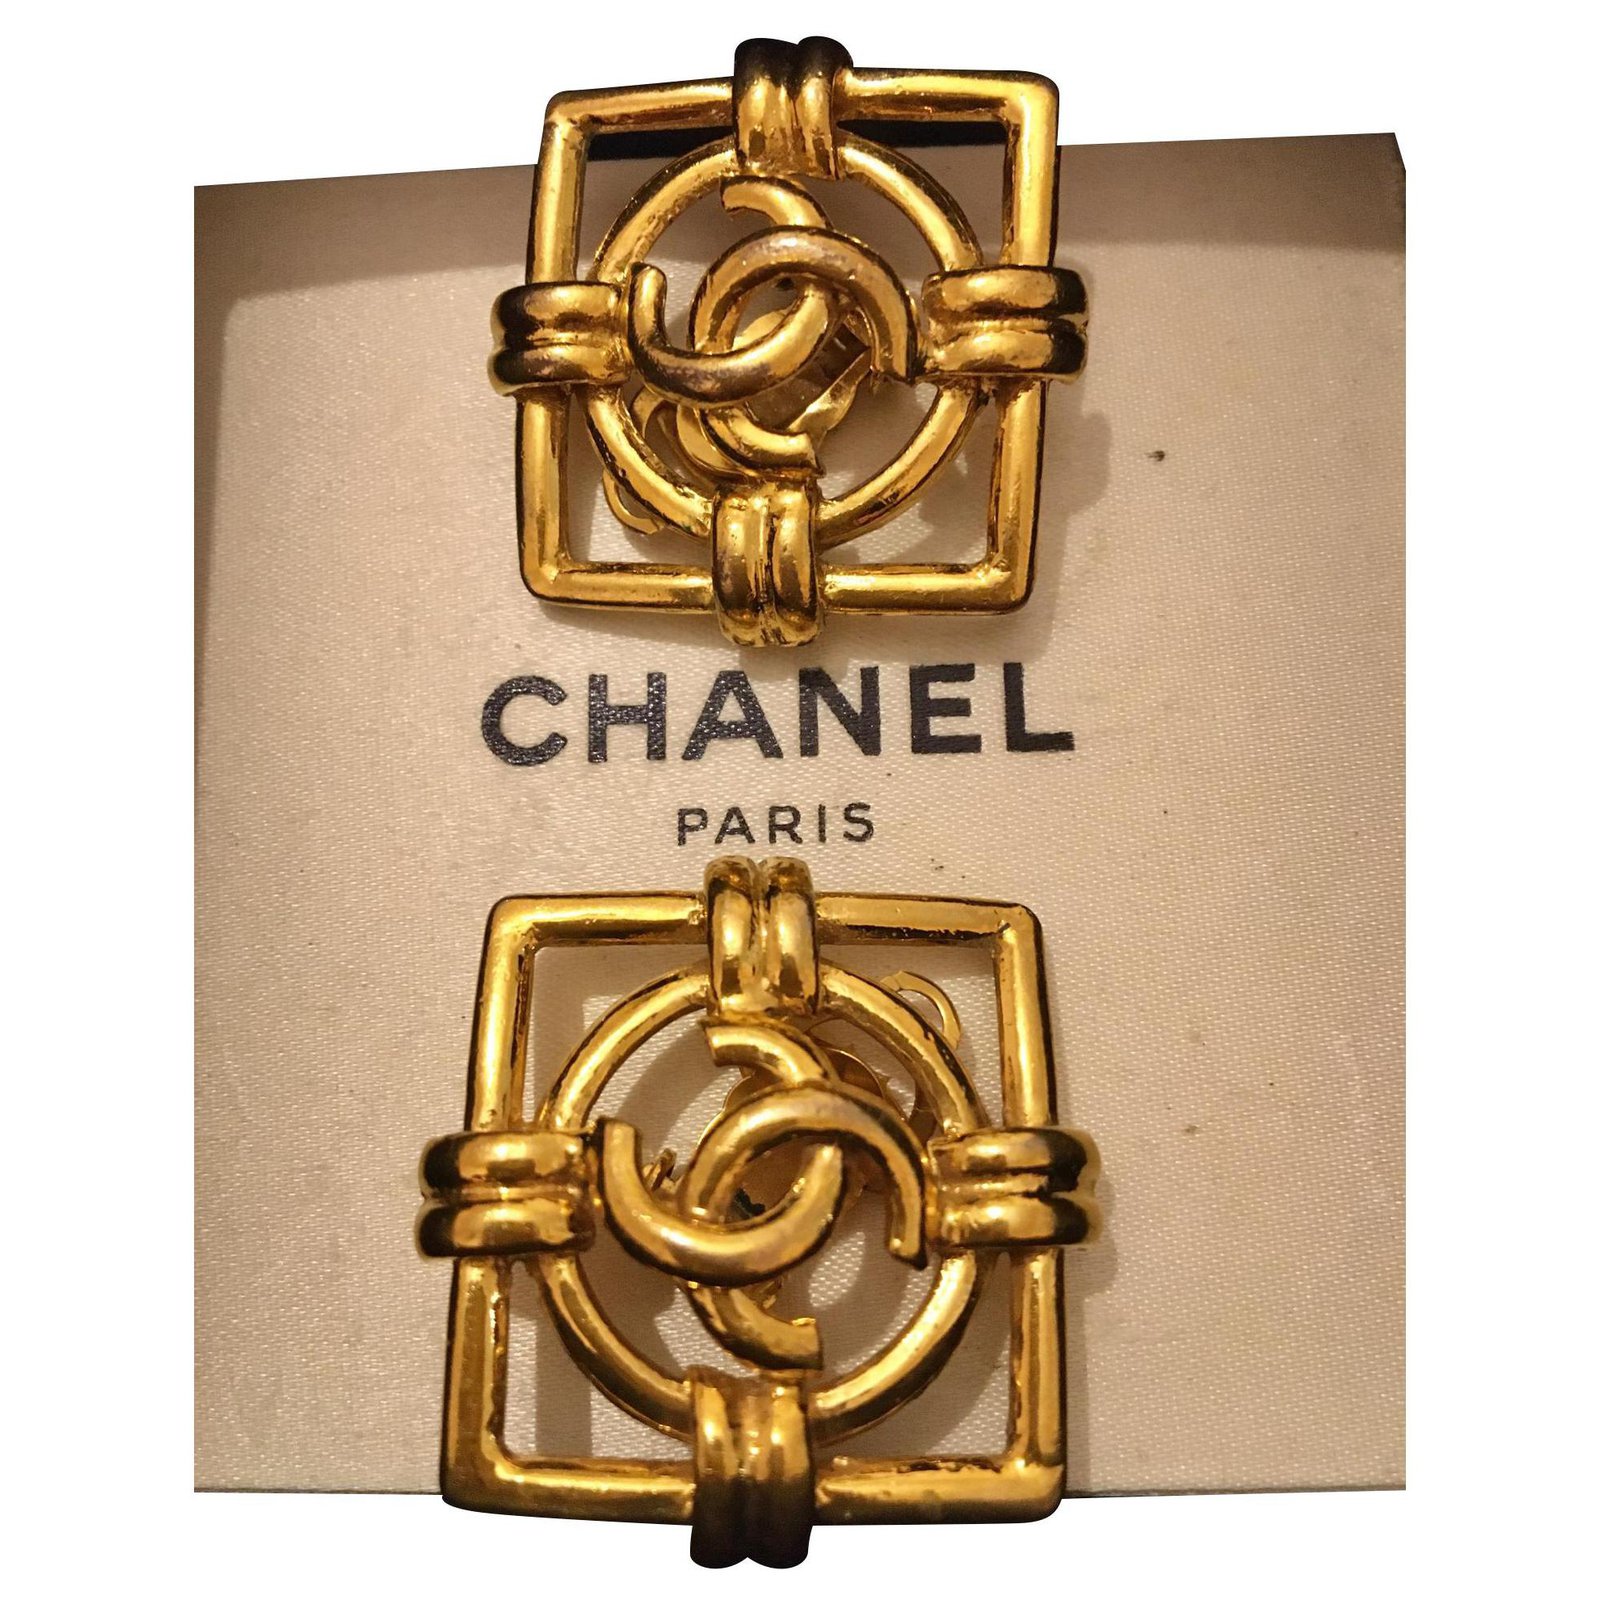 Vintage Chanel earrings